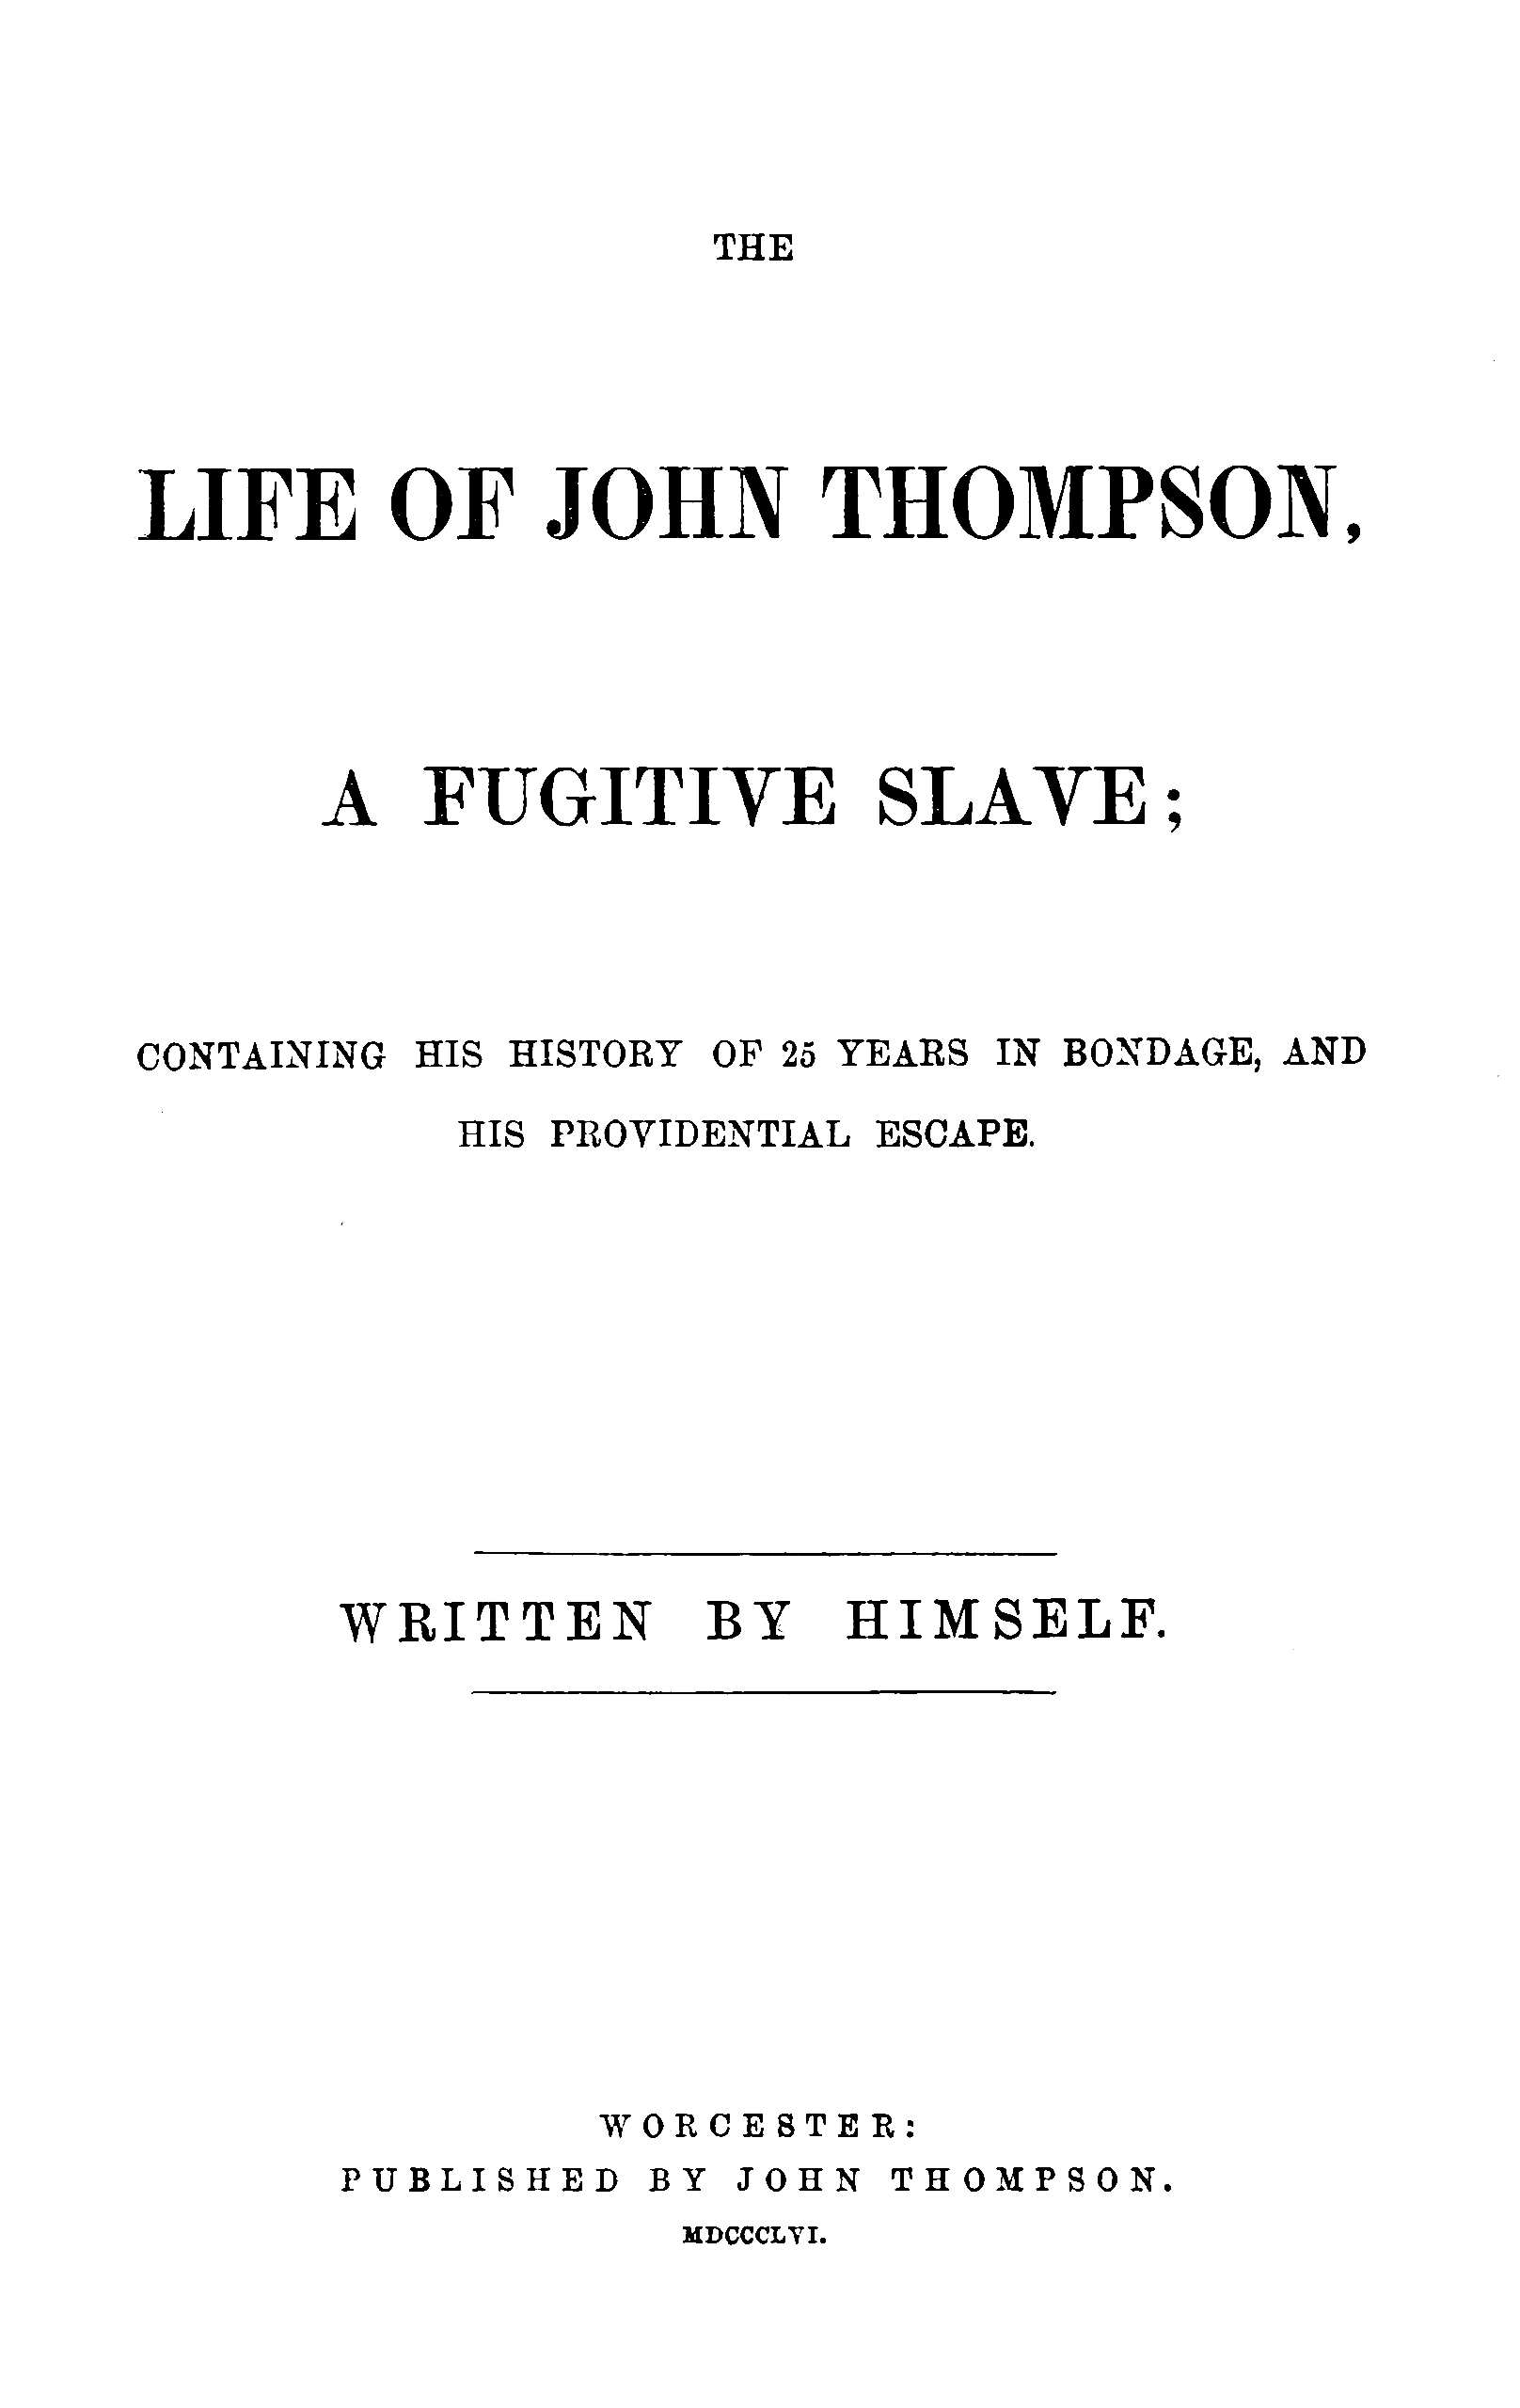 The life of John Thompson, a fugitive slave